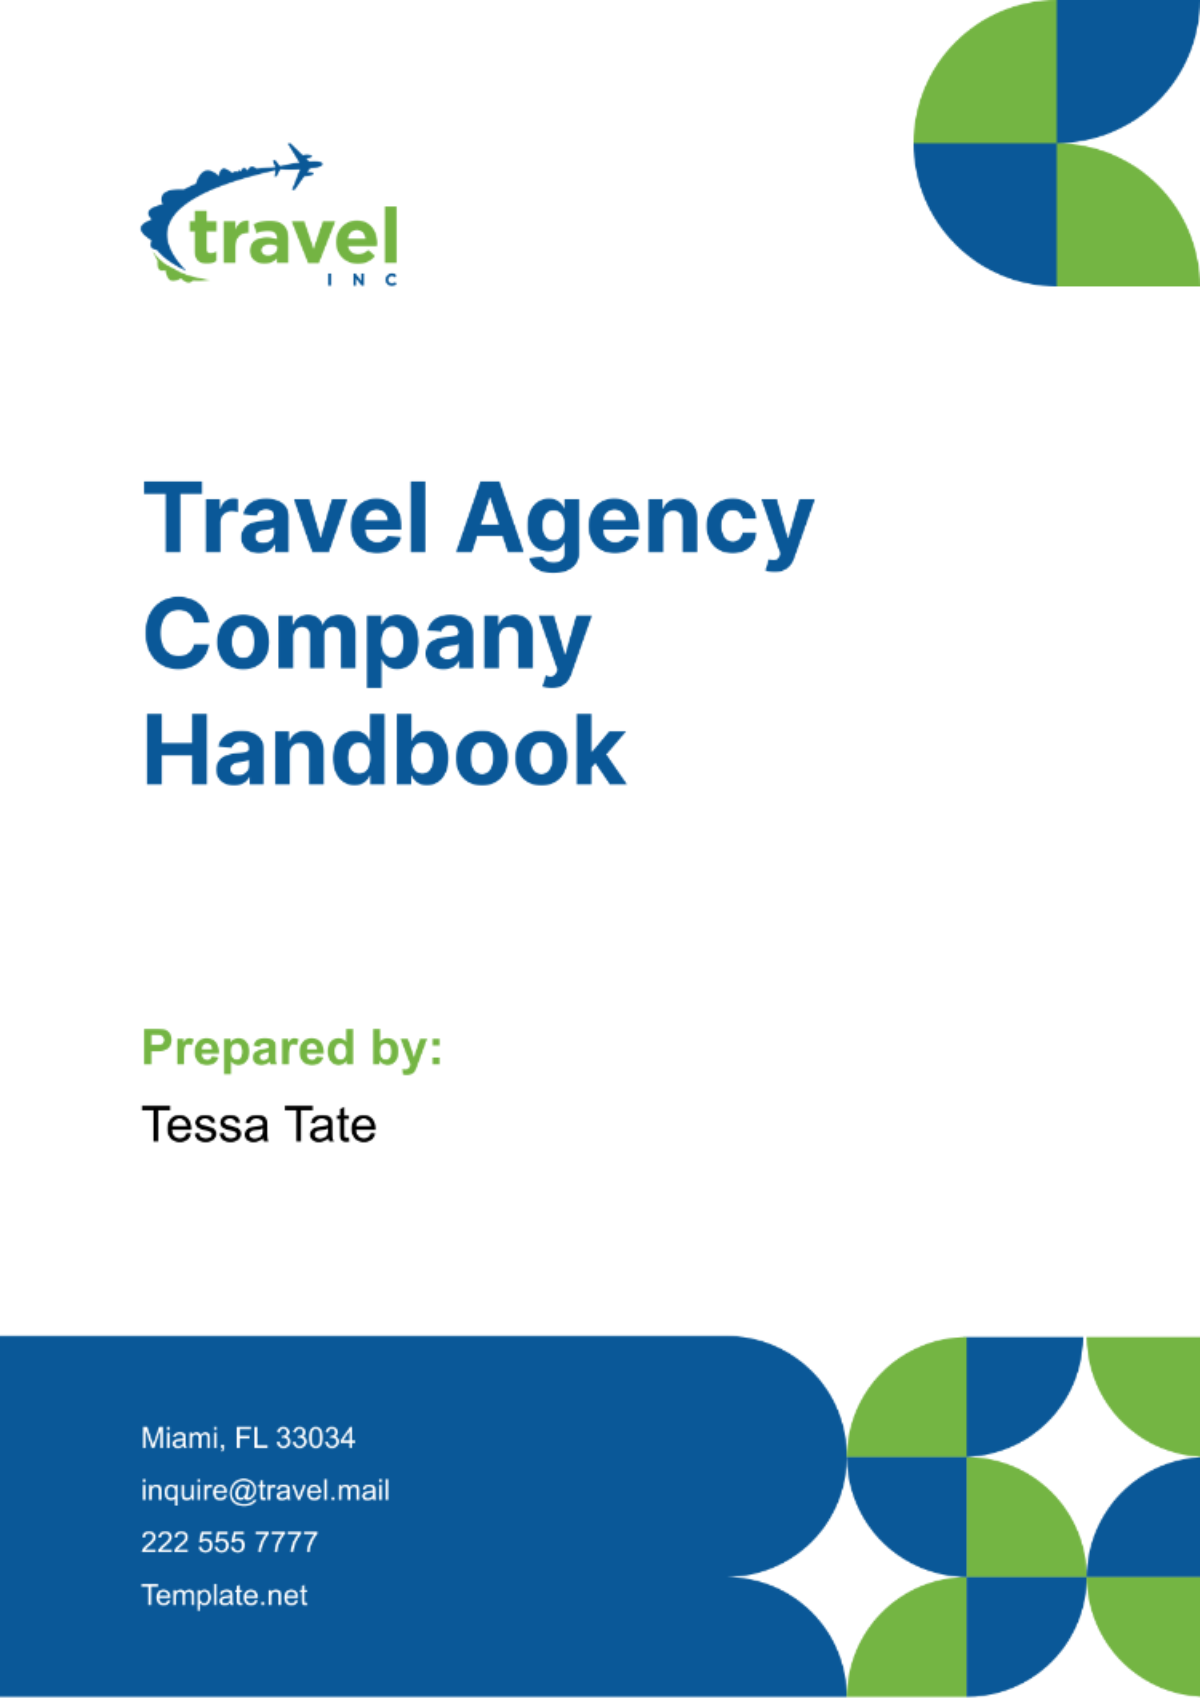 Travel Agency Company Handbook Template